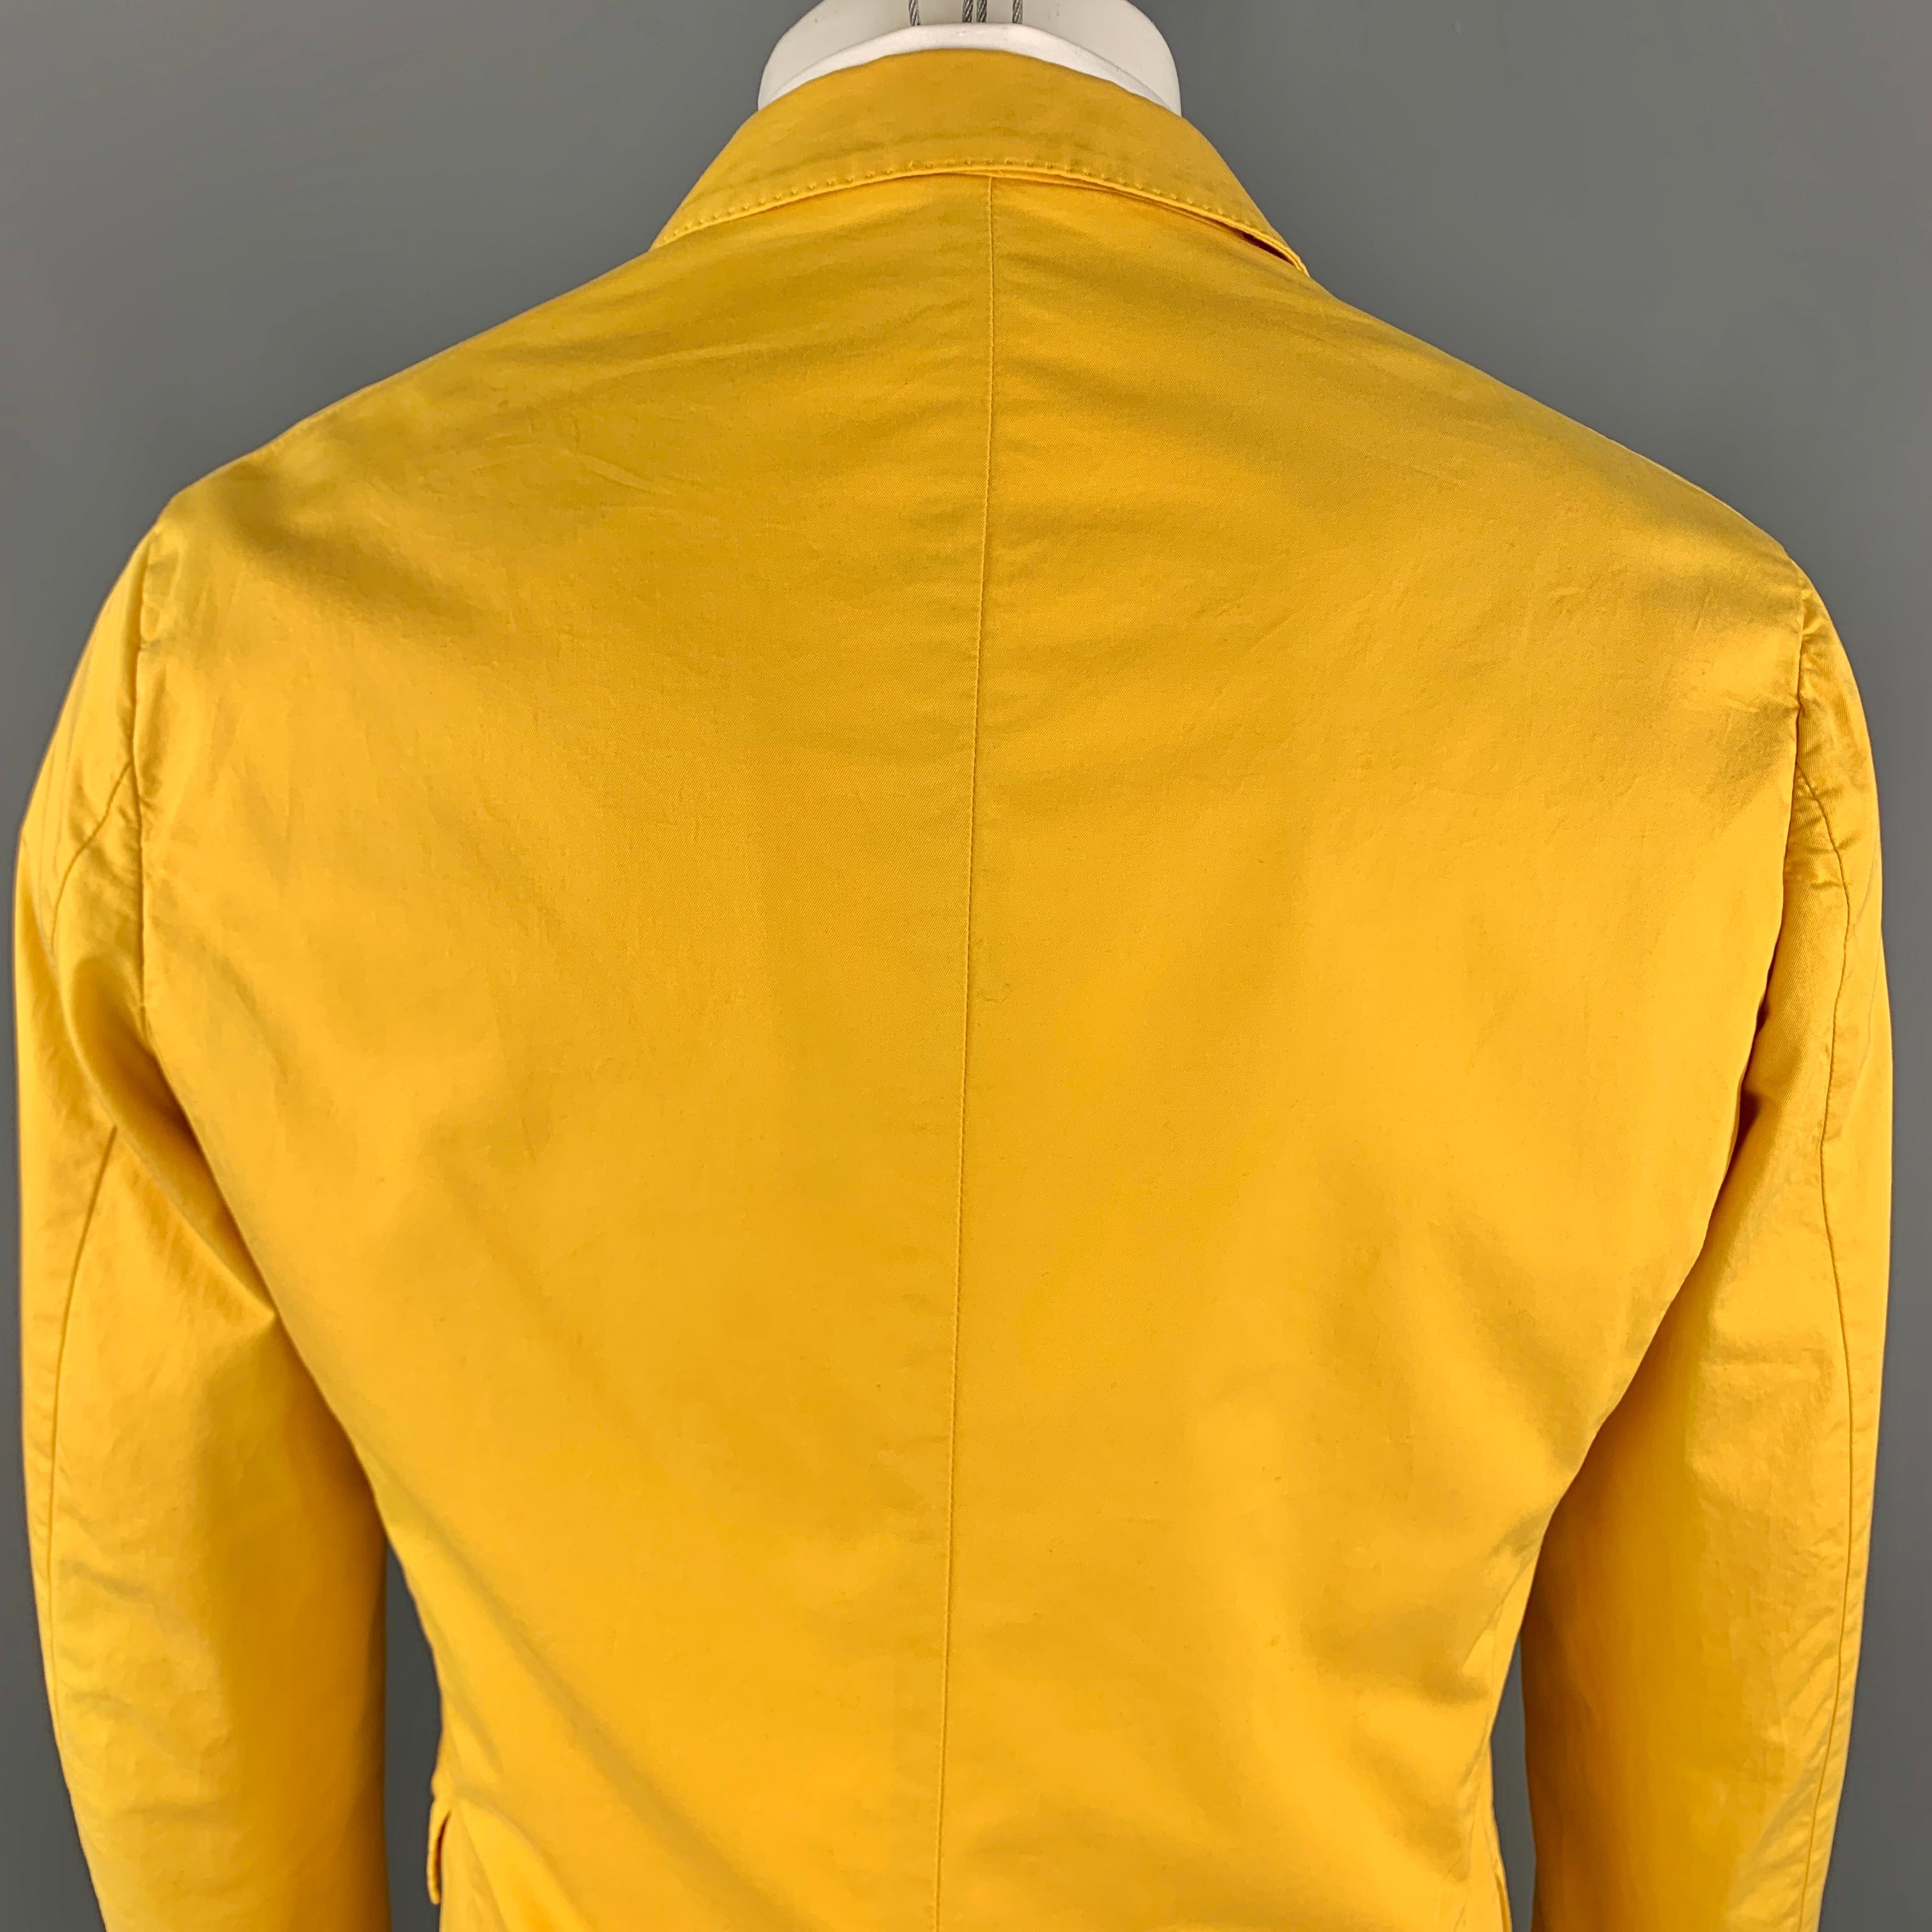 yellow sport coat